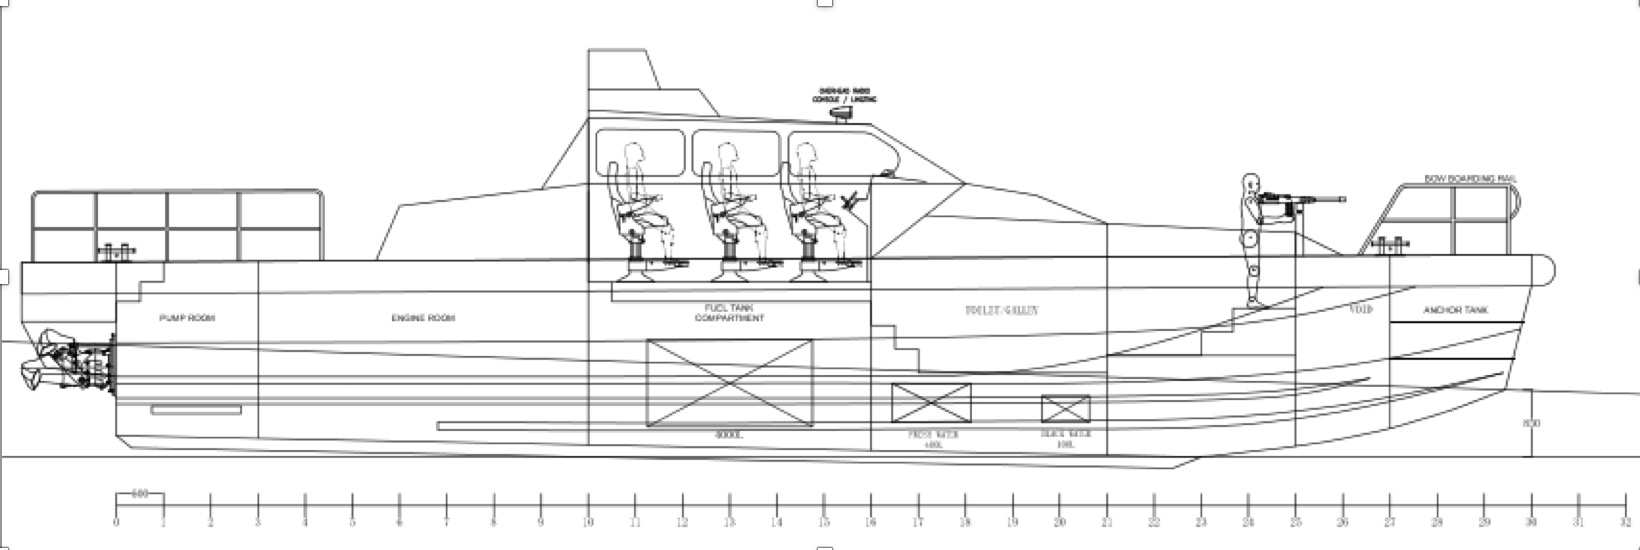 1720: NEW BUILD - 19.5m Fast Stealth Patrol Boat - 090.jpg